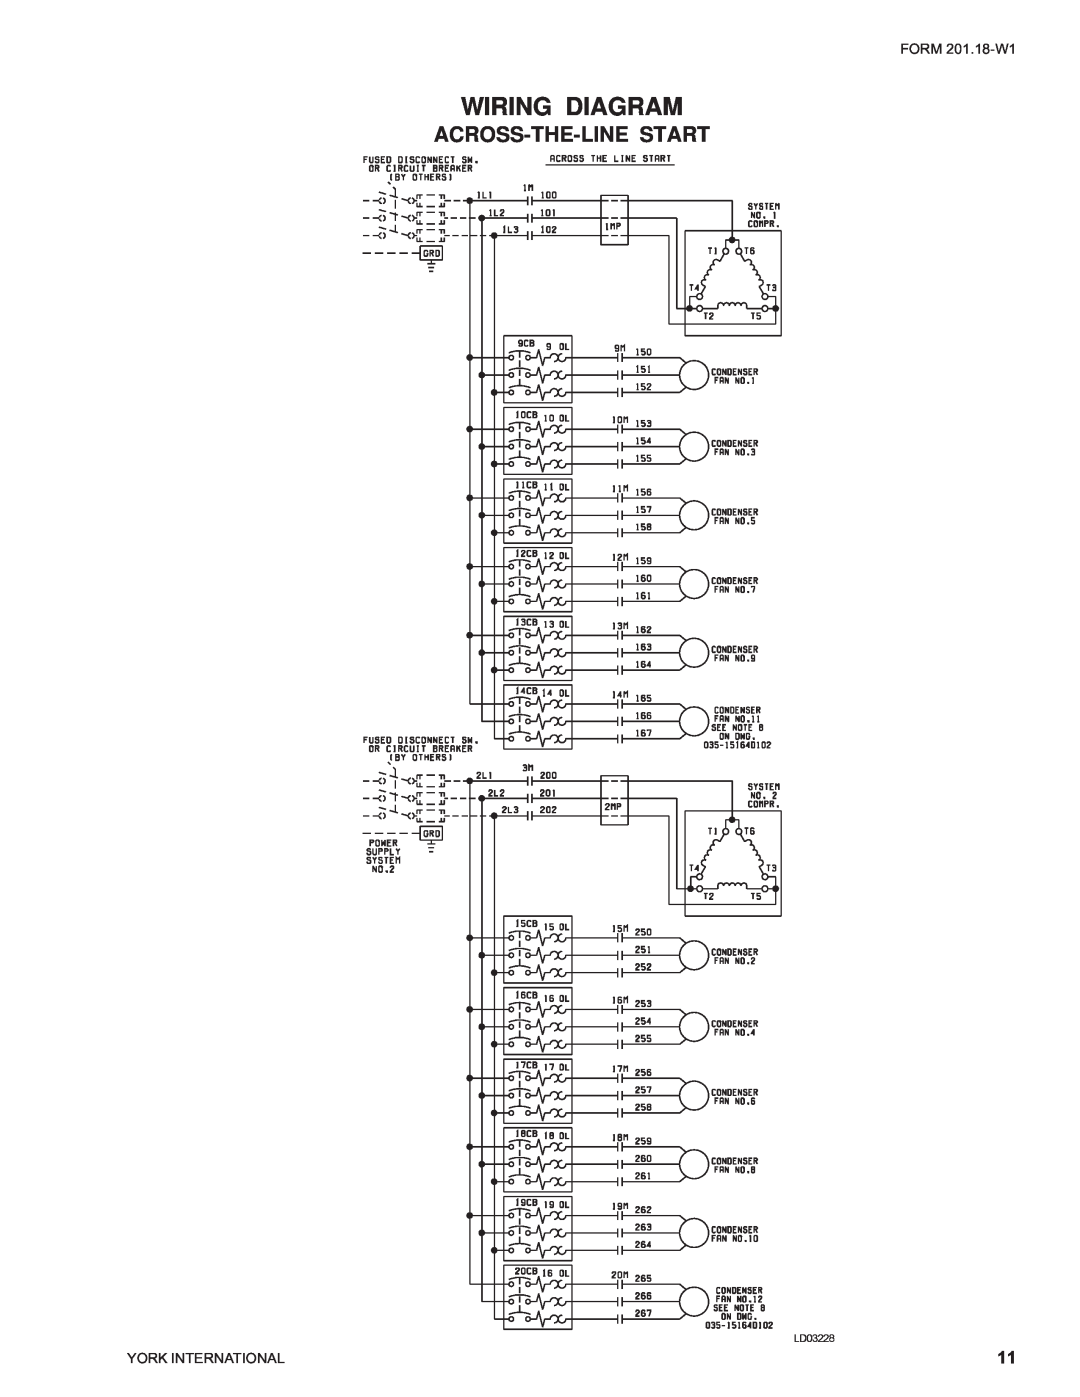 York YCAS0230 manual LD03228, Wiring Diagram, Across-The-Linestart 